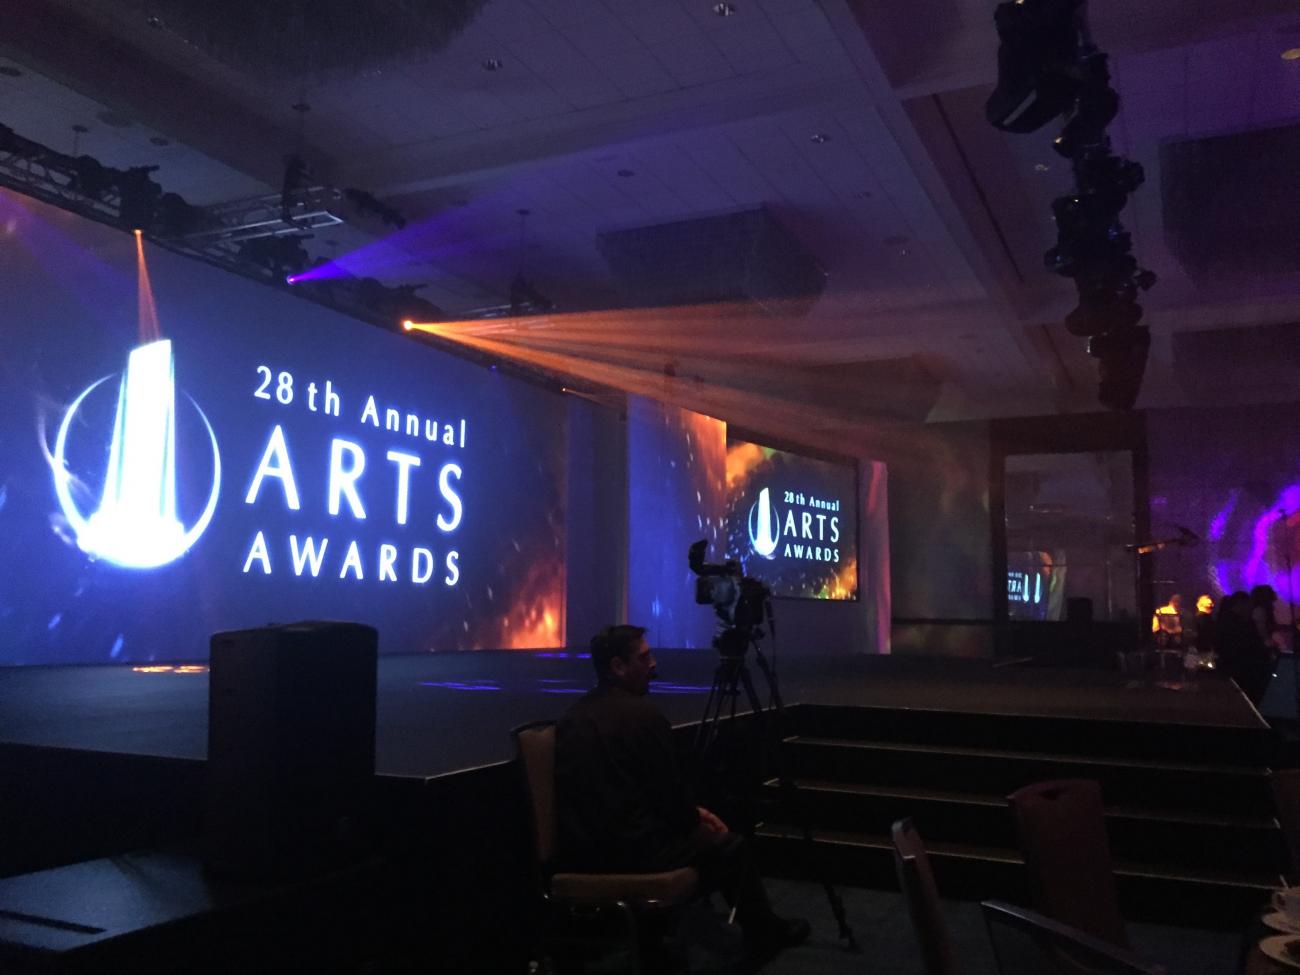 28th annual ARTS Awards